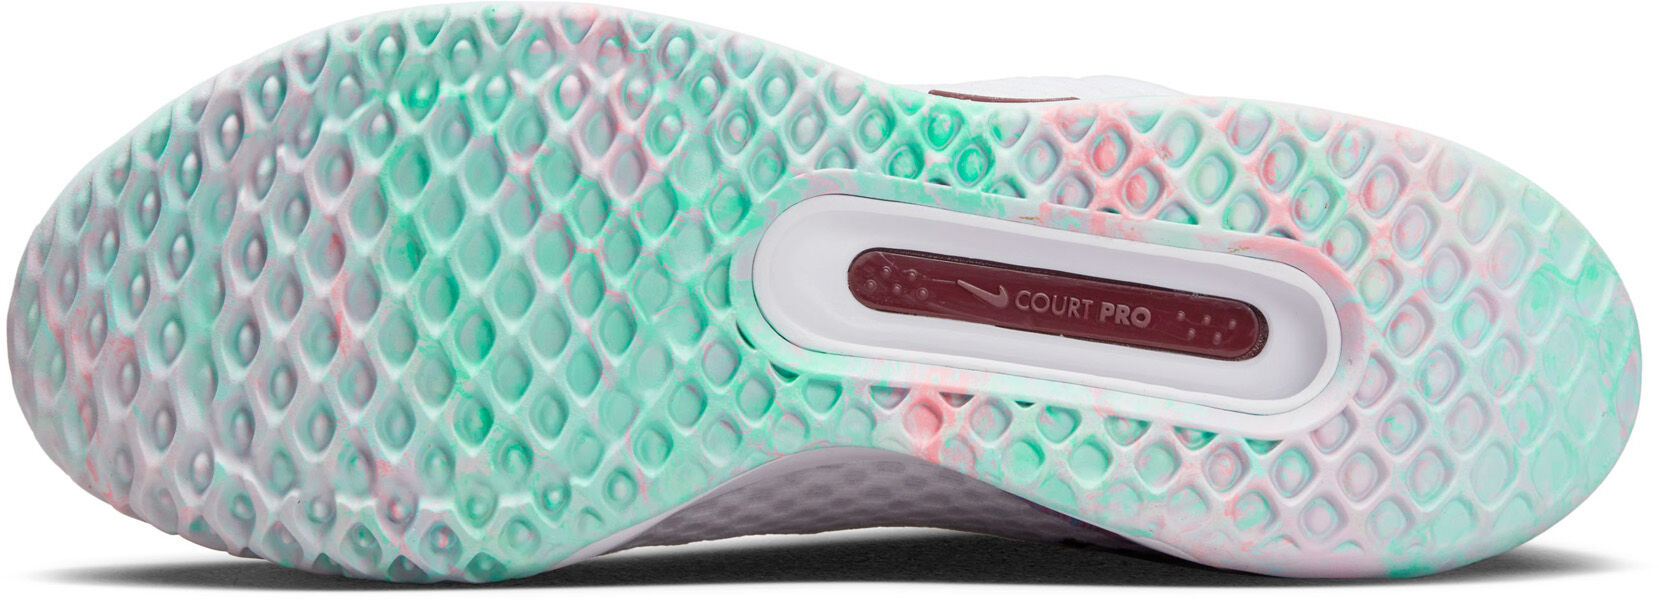 Nike court zoom pro women's hard cou